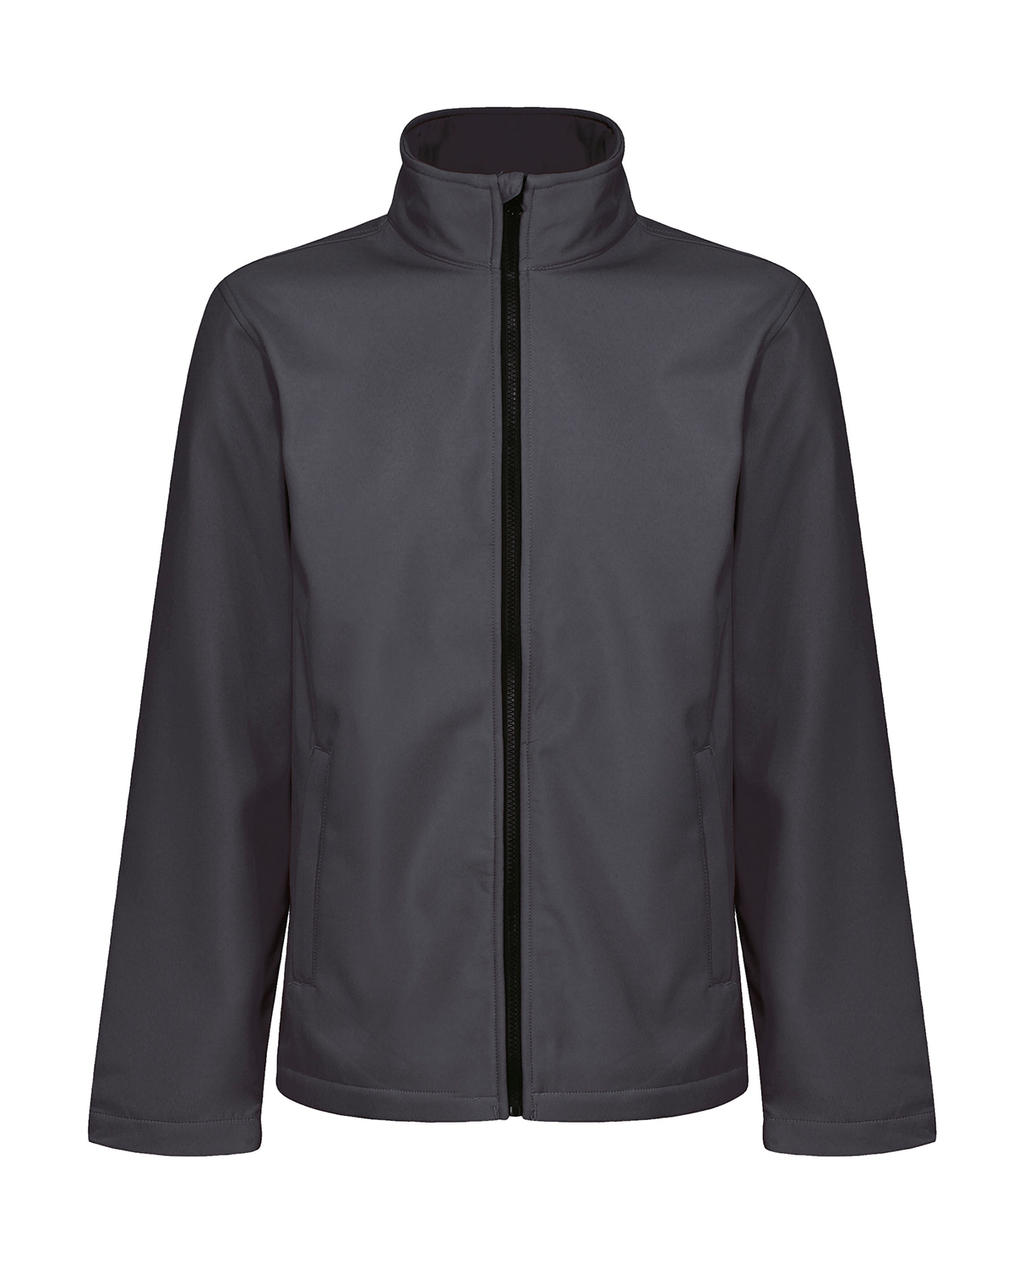  Eco Ablaze Softshell Jacket in Farbe Seal Grey/Black